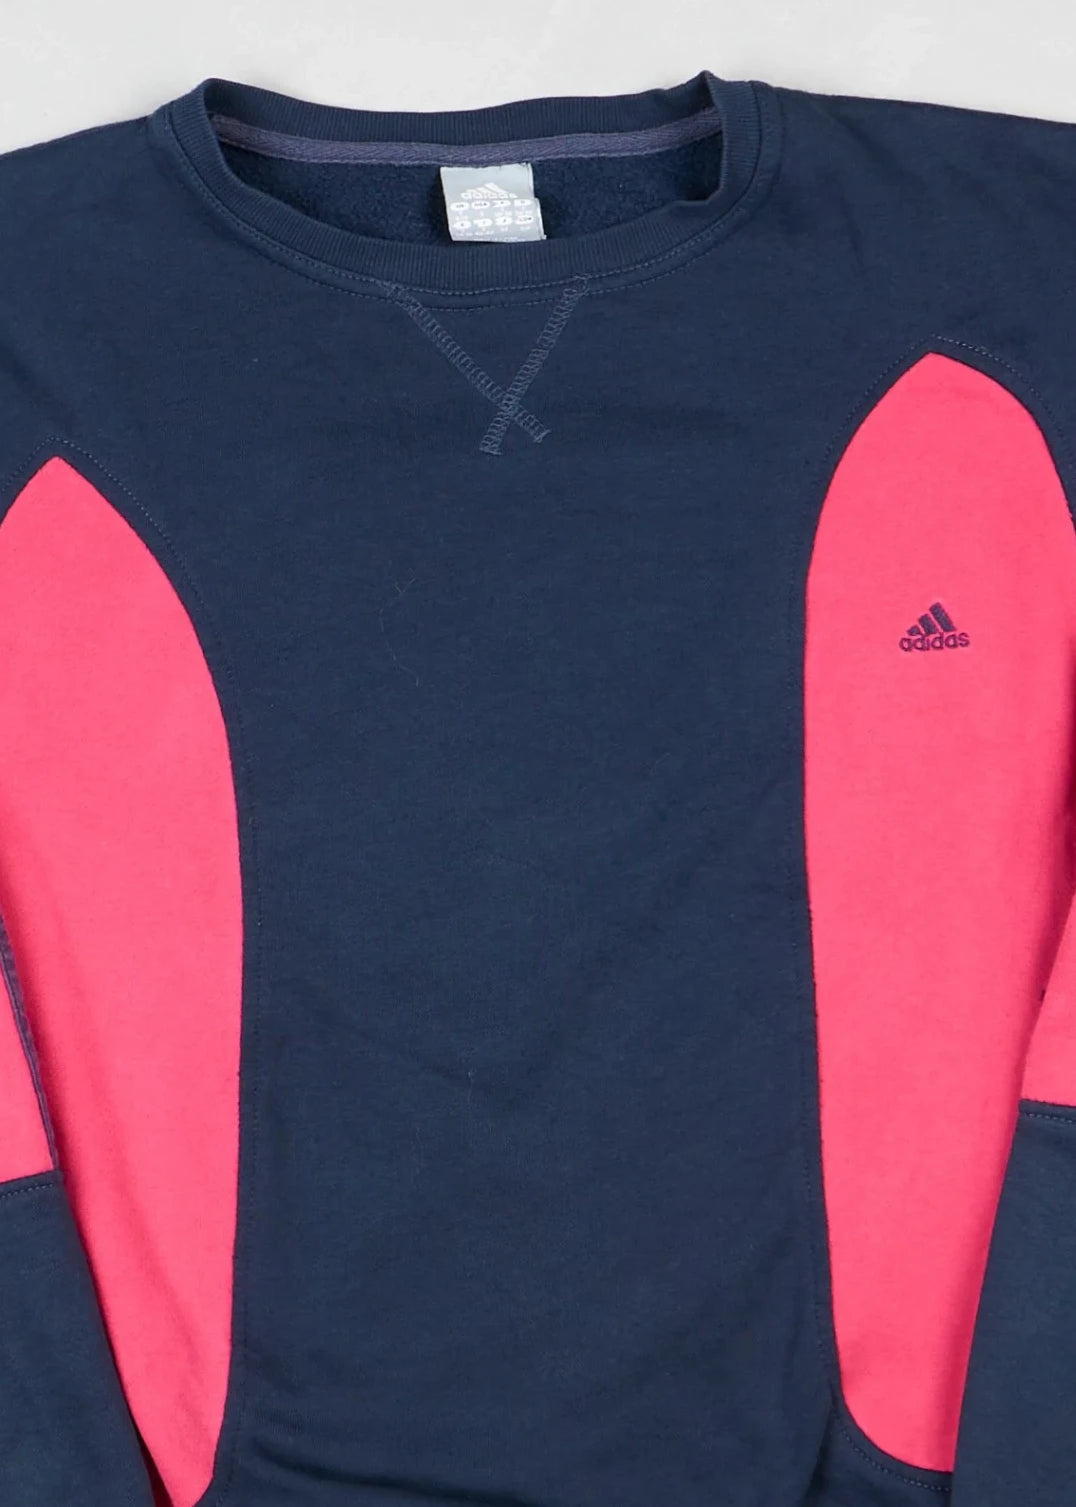 Adidas - Sweatshirt (L) Center